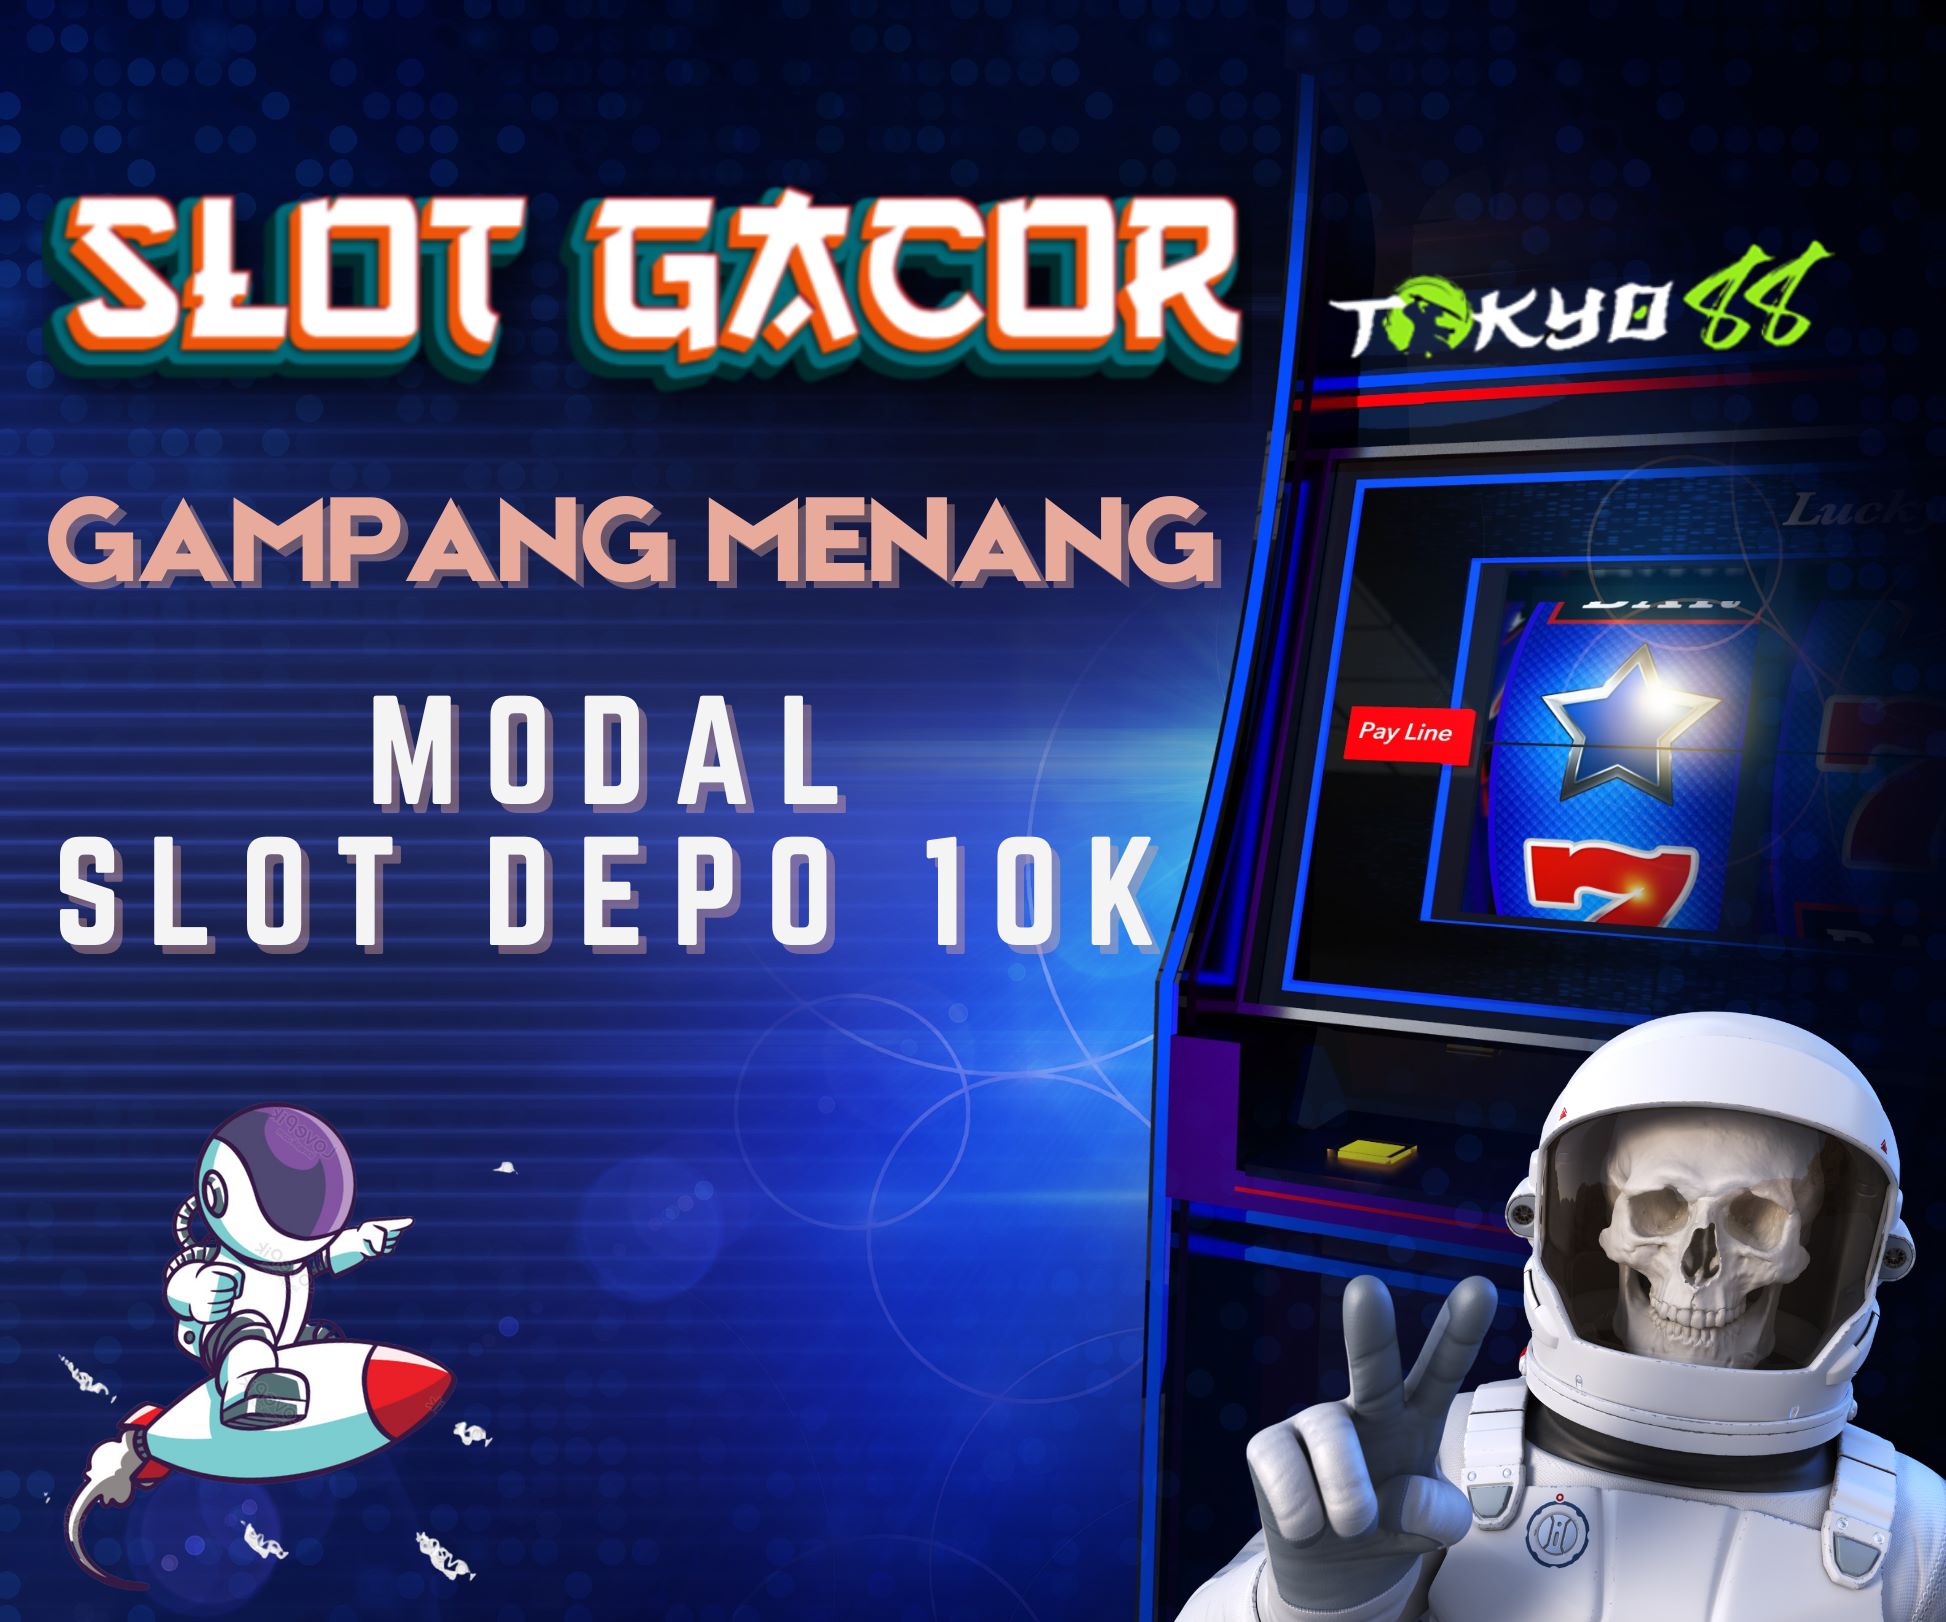 Winning Made Easy: Slot Nolimit City, Slot Gacor Gampang Menang, and Tangkasnet Thrills Await